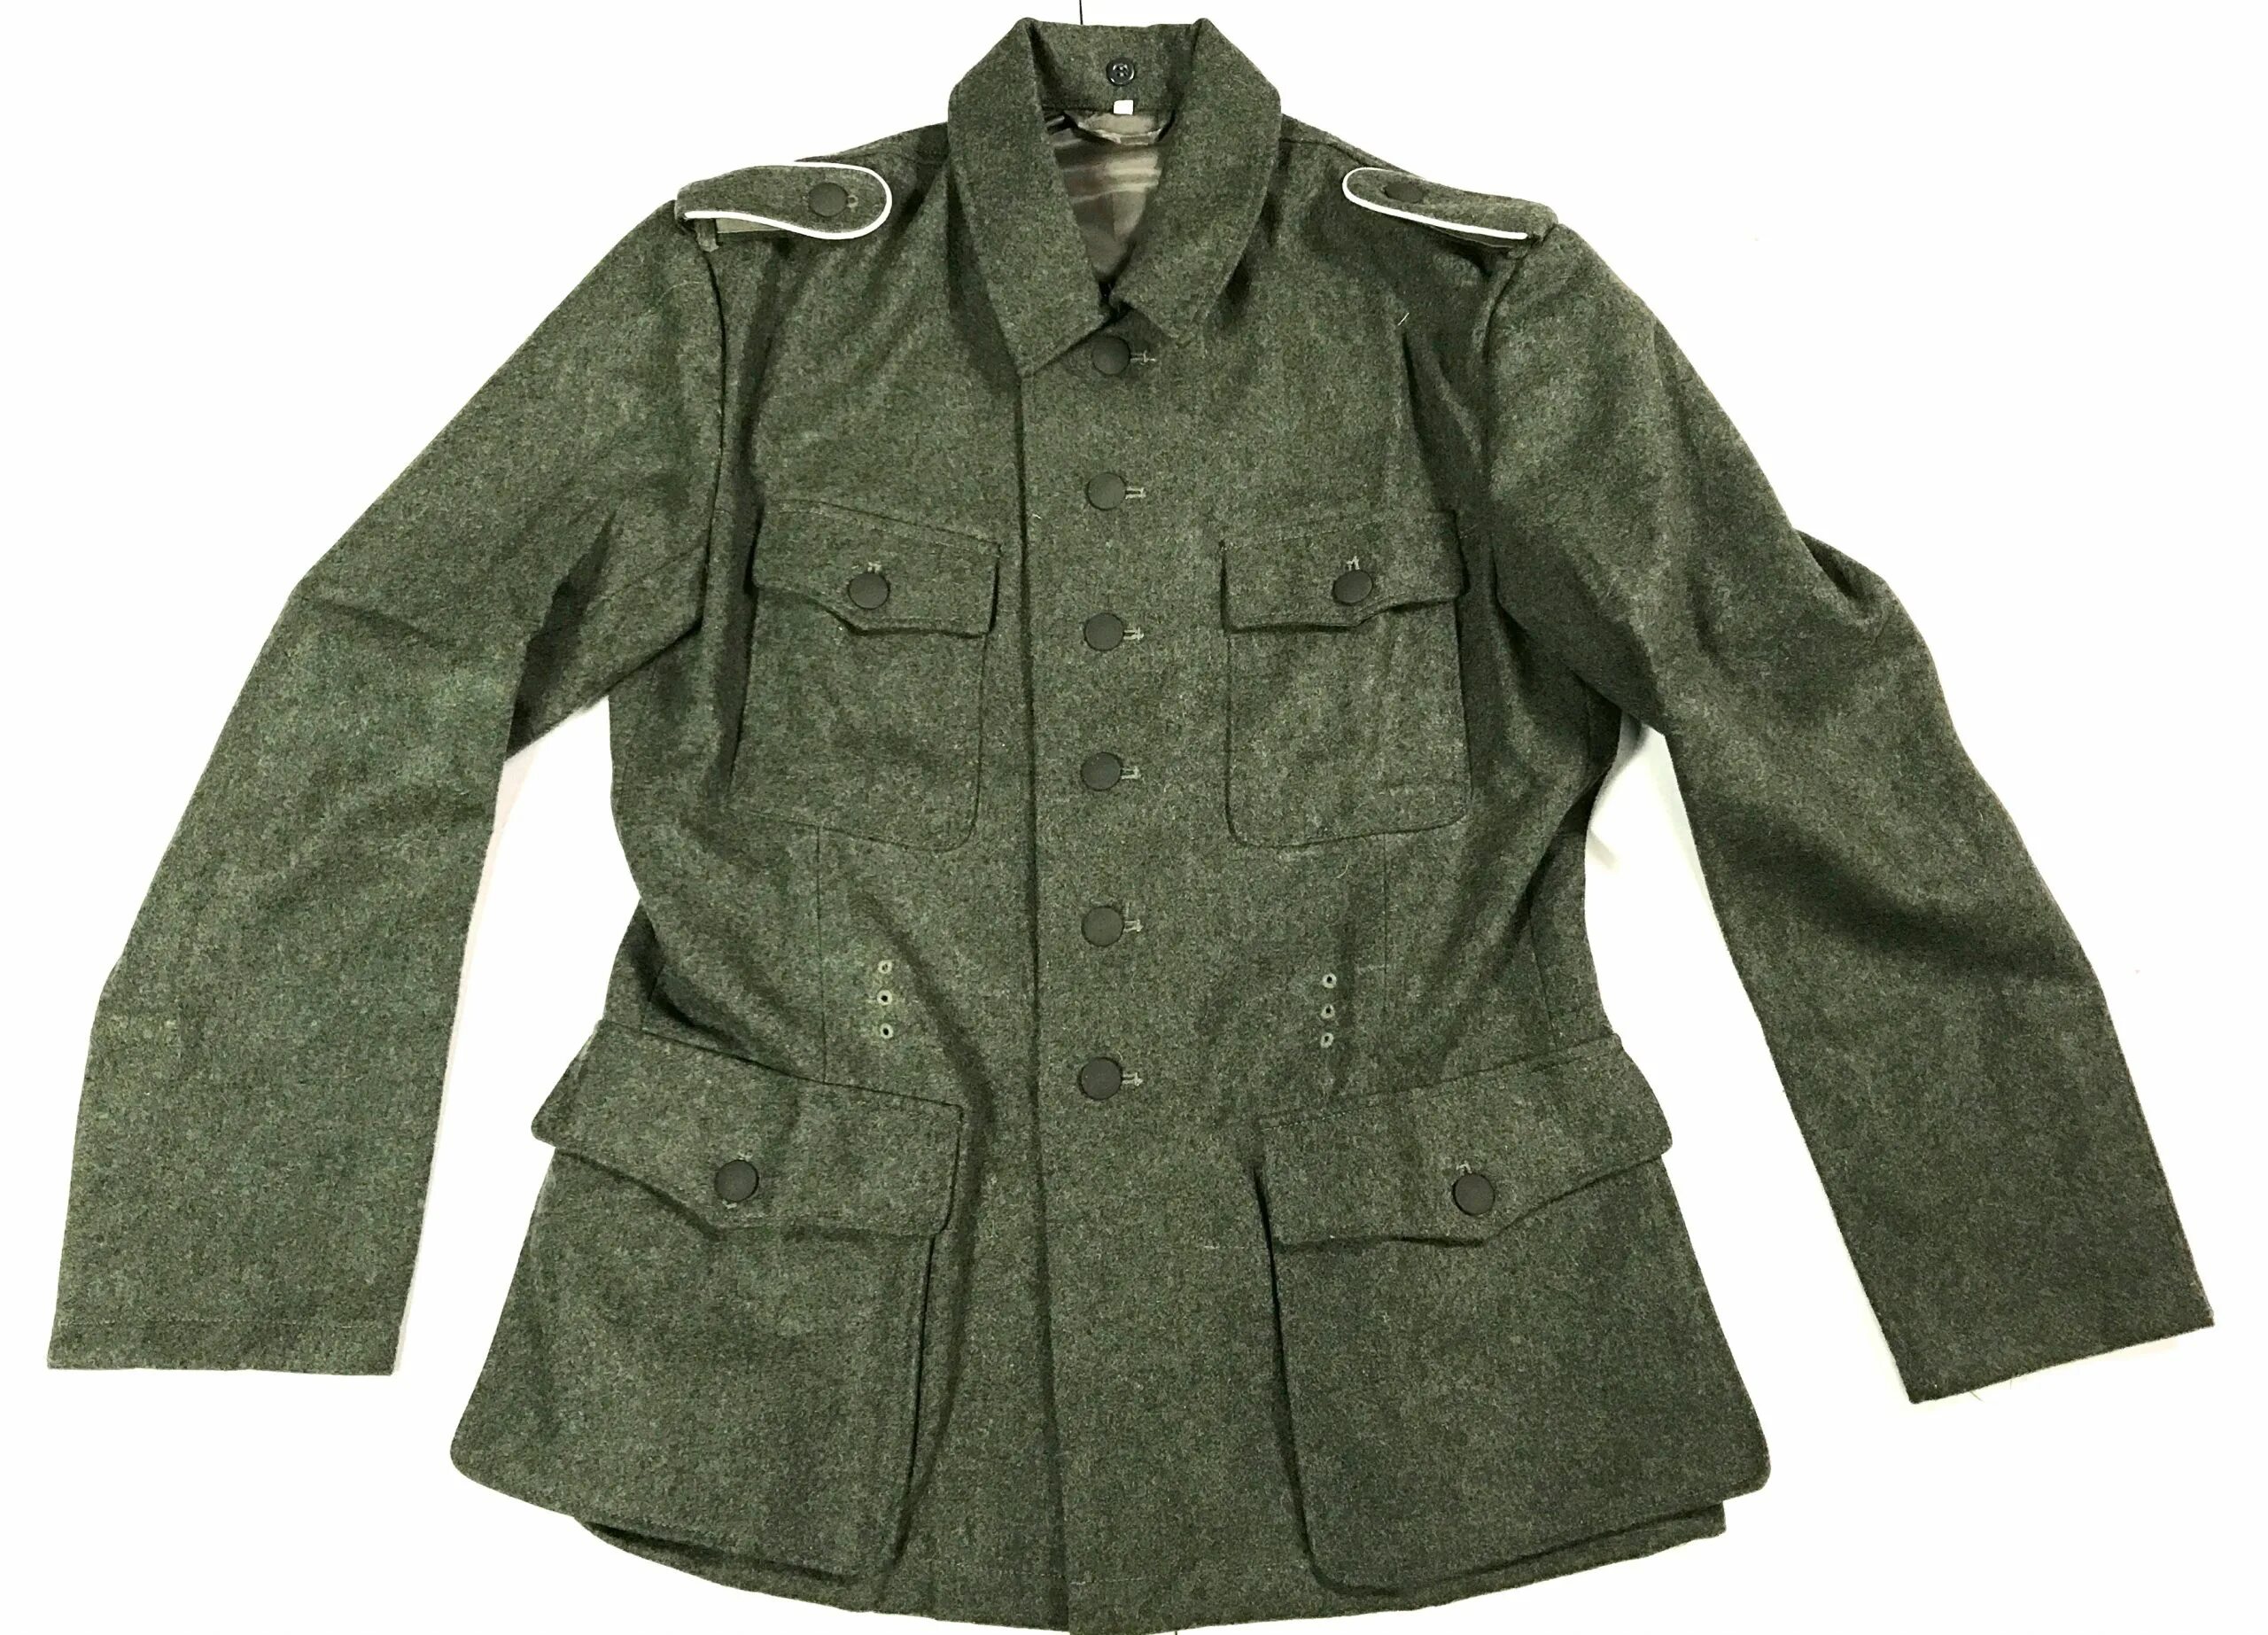 Форма 40 42. M-1943 (униформа). M1942 uniform. M40 Infantry Wehrmacht Tunic. M-1943 field uniform.